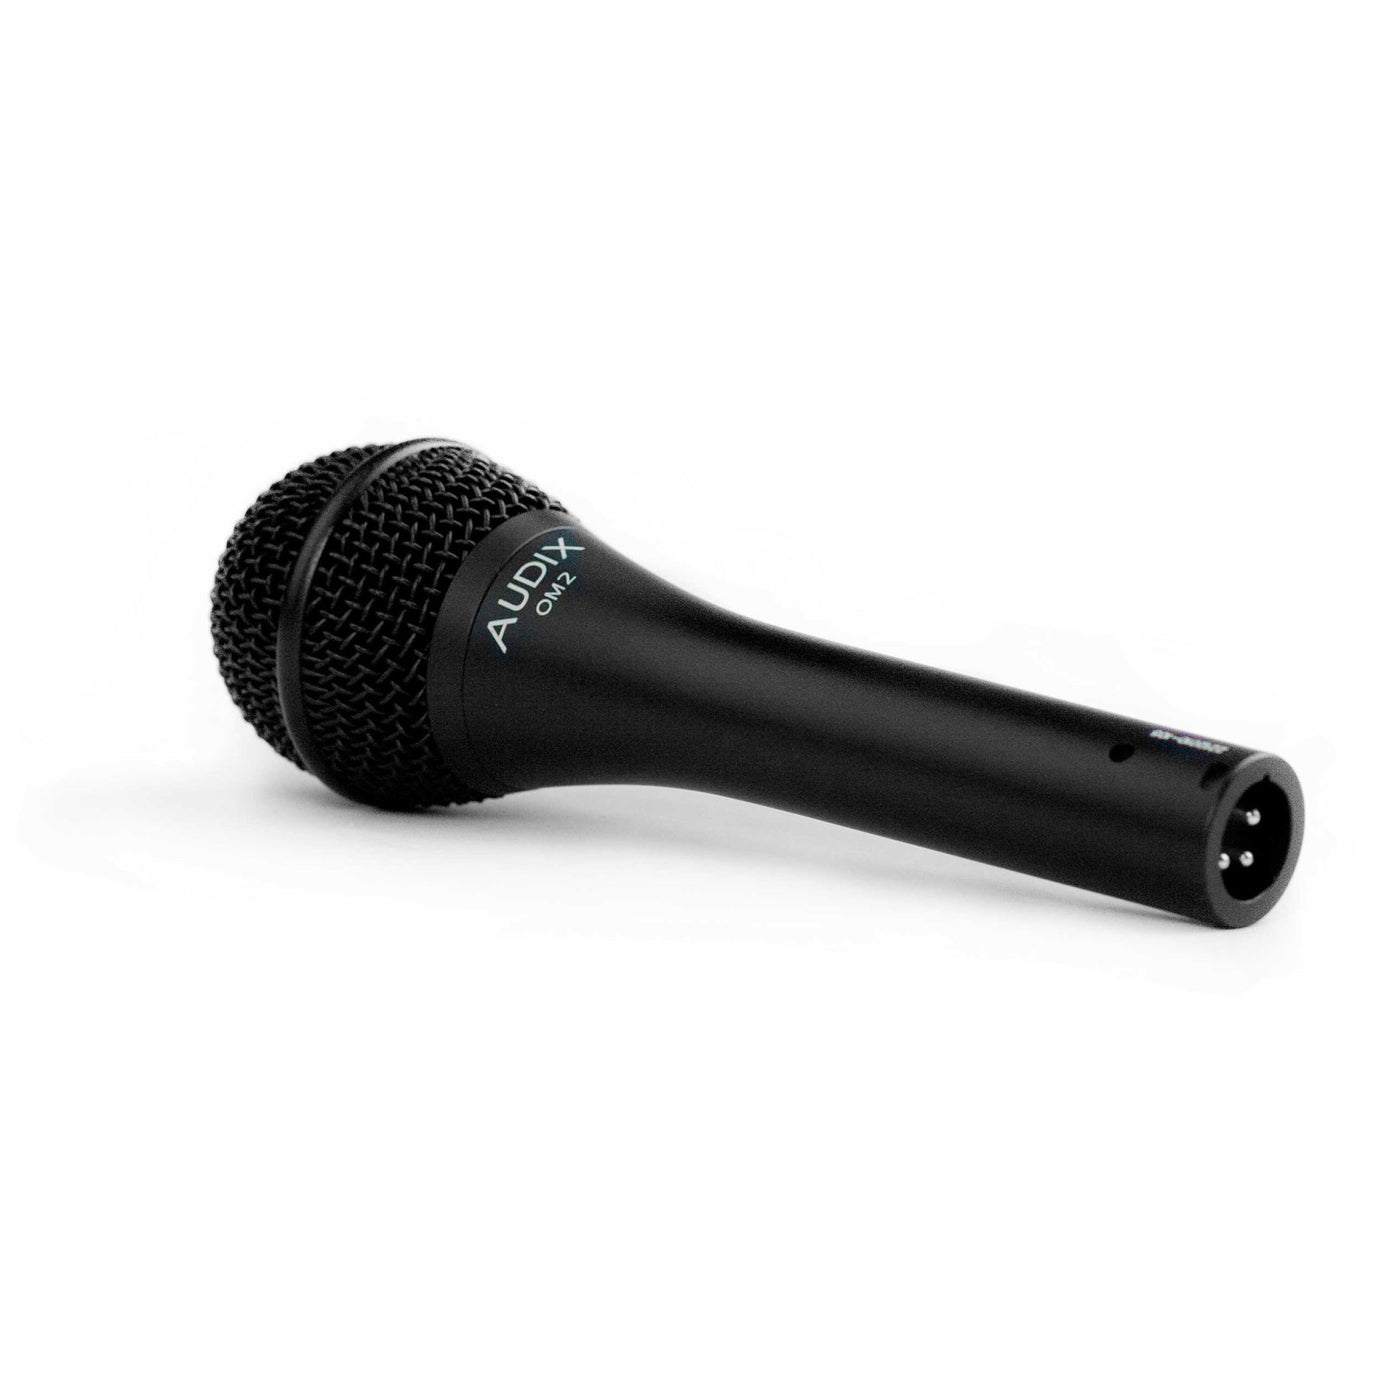 Audix OM2 Professional Dynamic Vocal Microphone